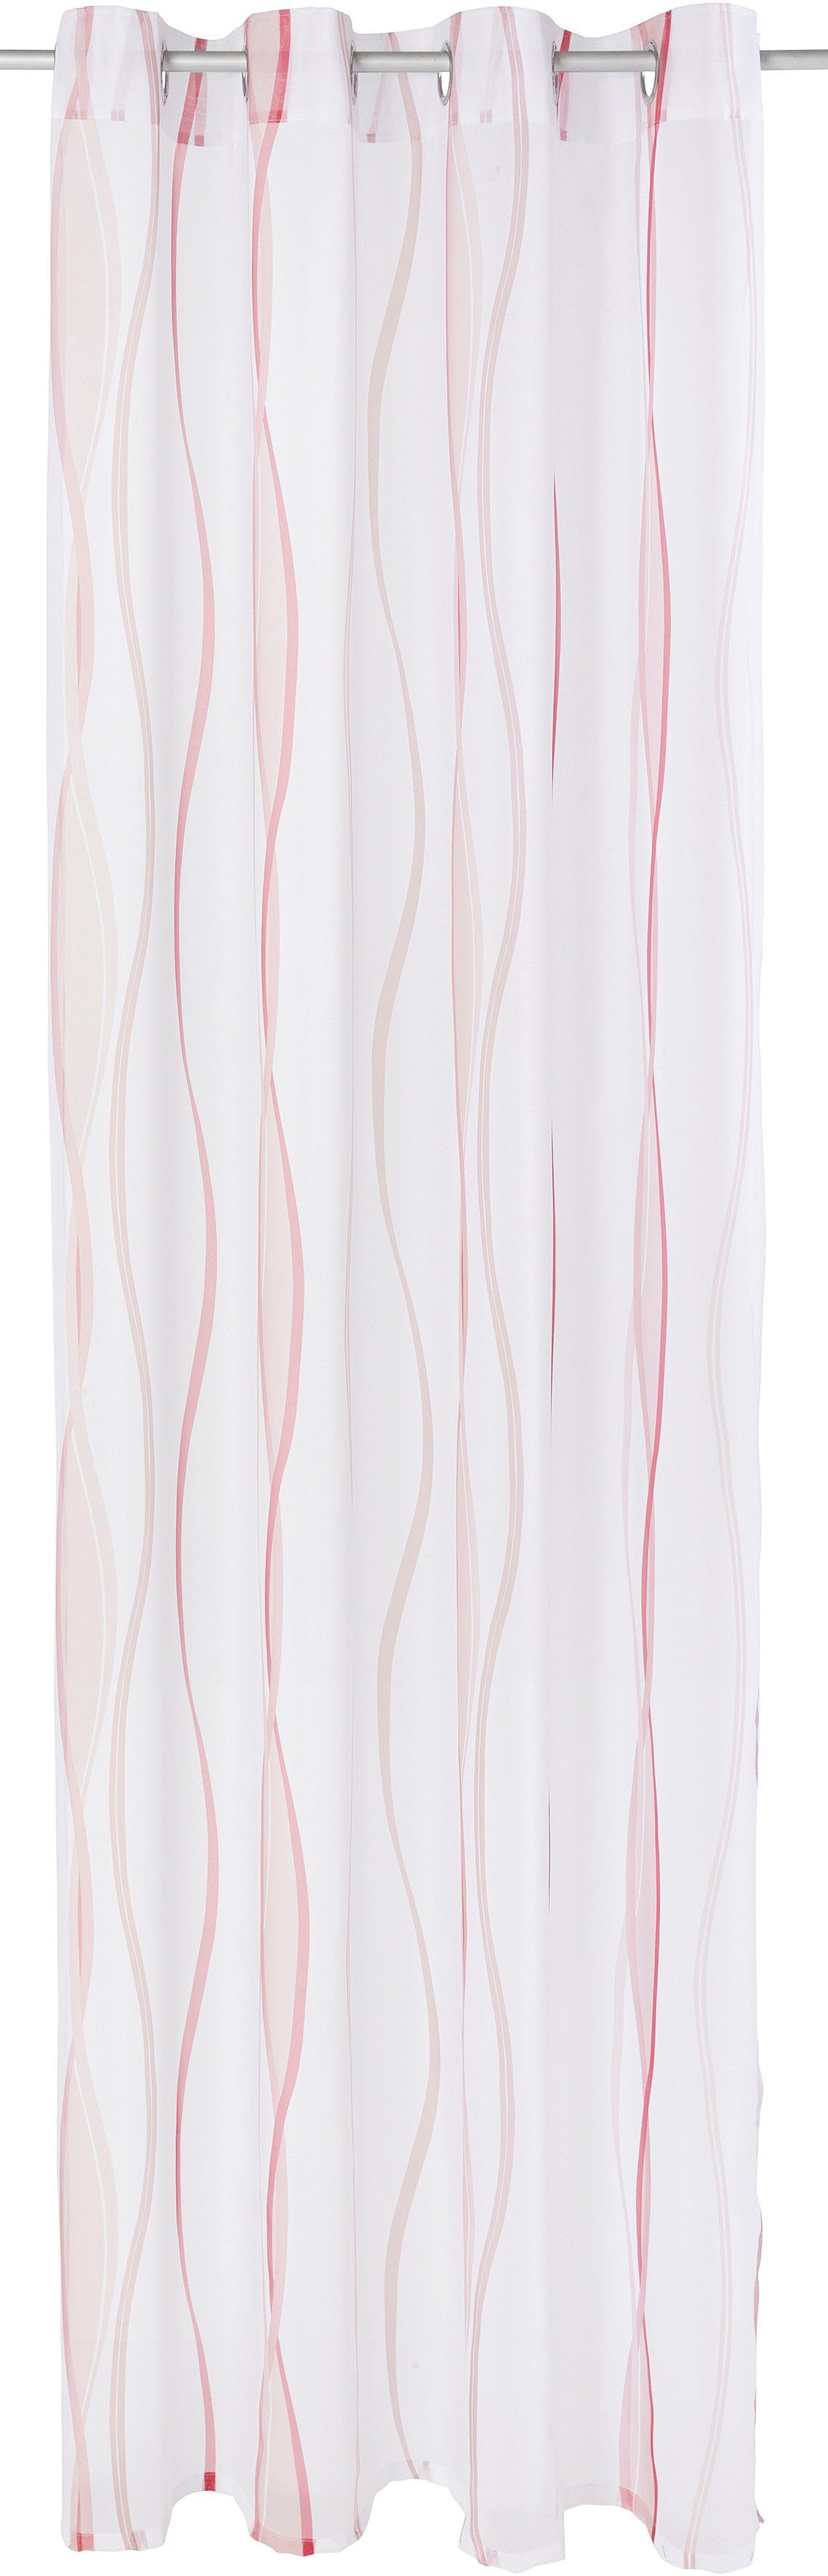 Gardine Dimona, my home, weiß/rosé Voile, Polyester, Set, Ösen (2 St), Voile, transparent, 2-er Wellen transparent